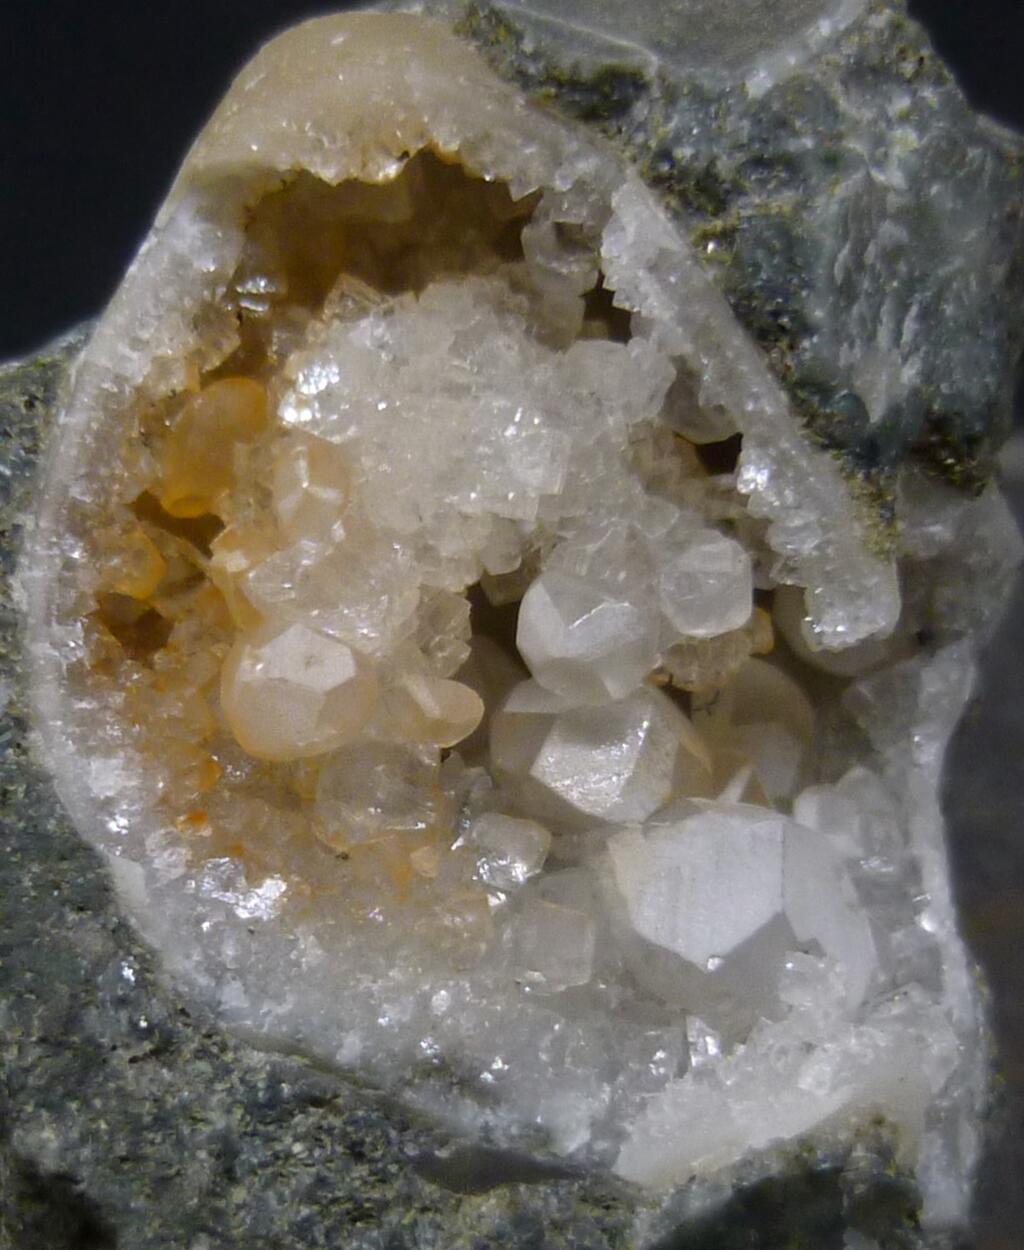 Calcite & Fossil